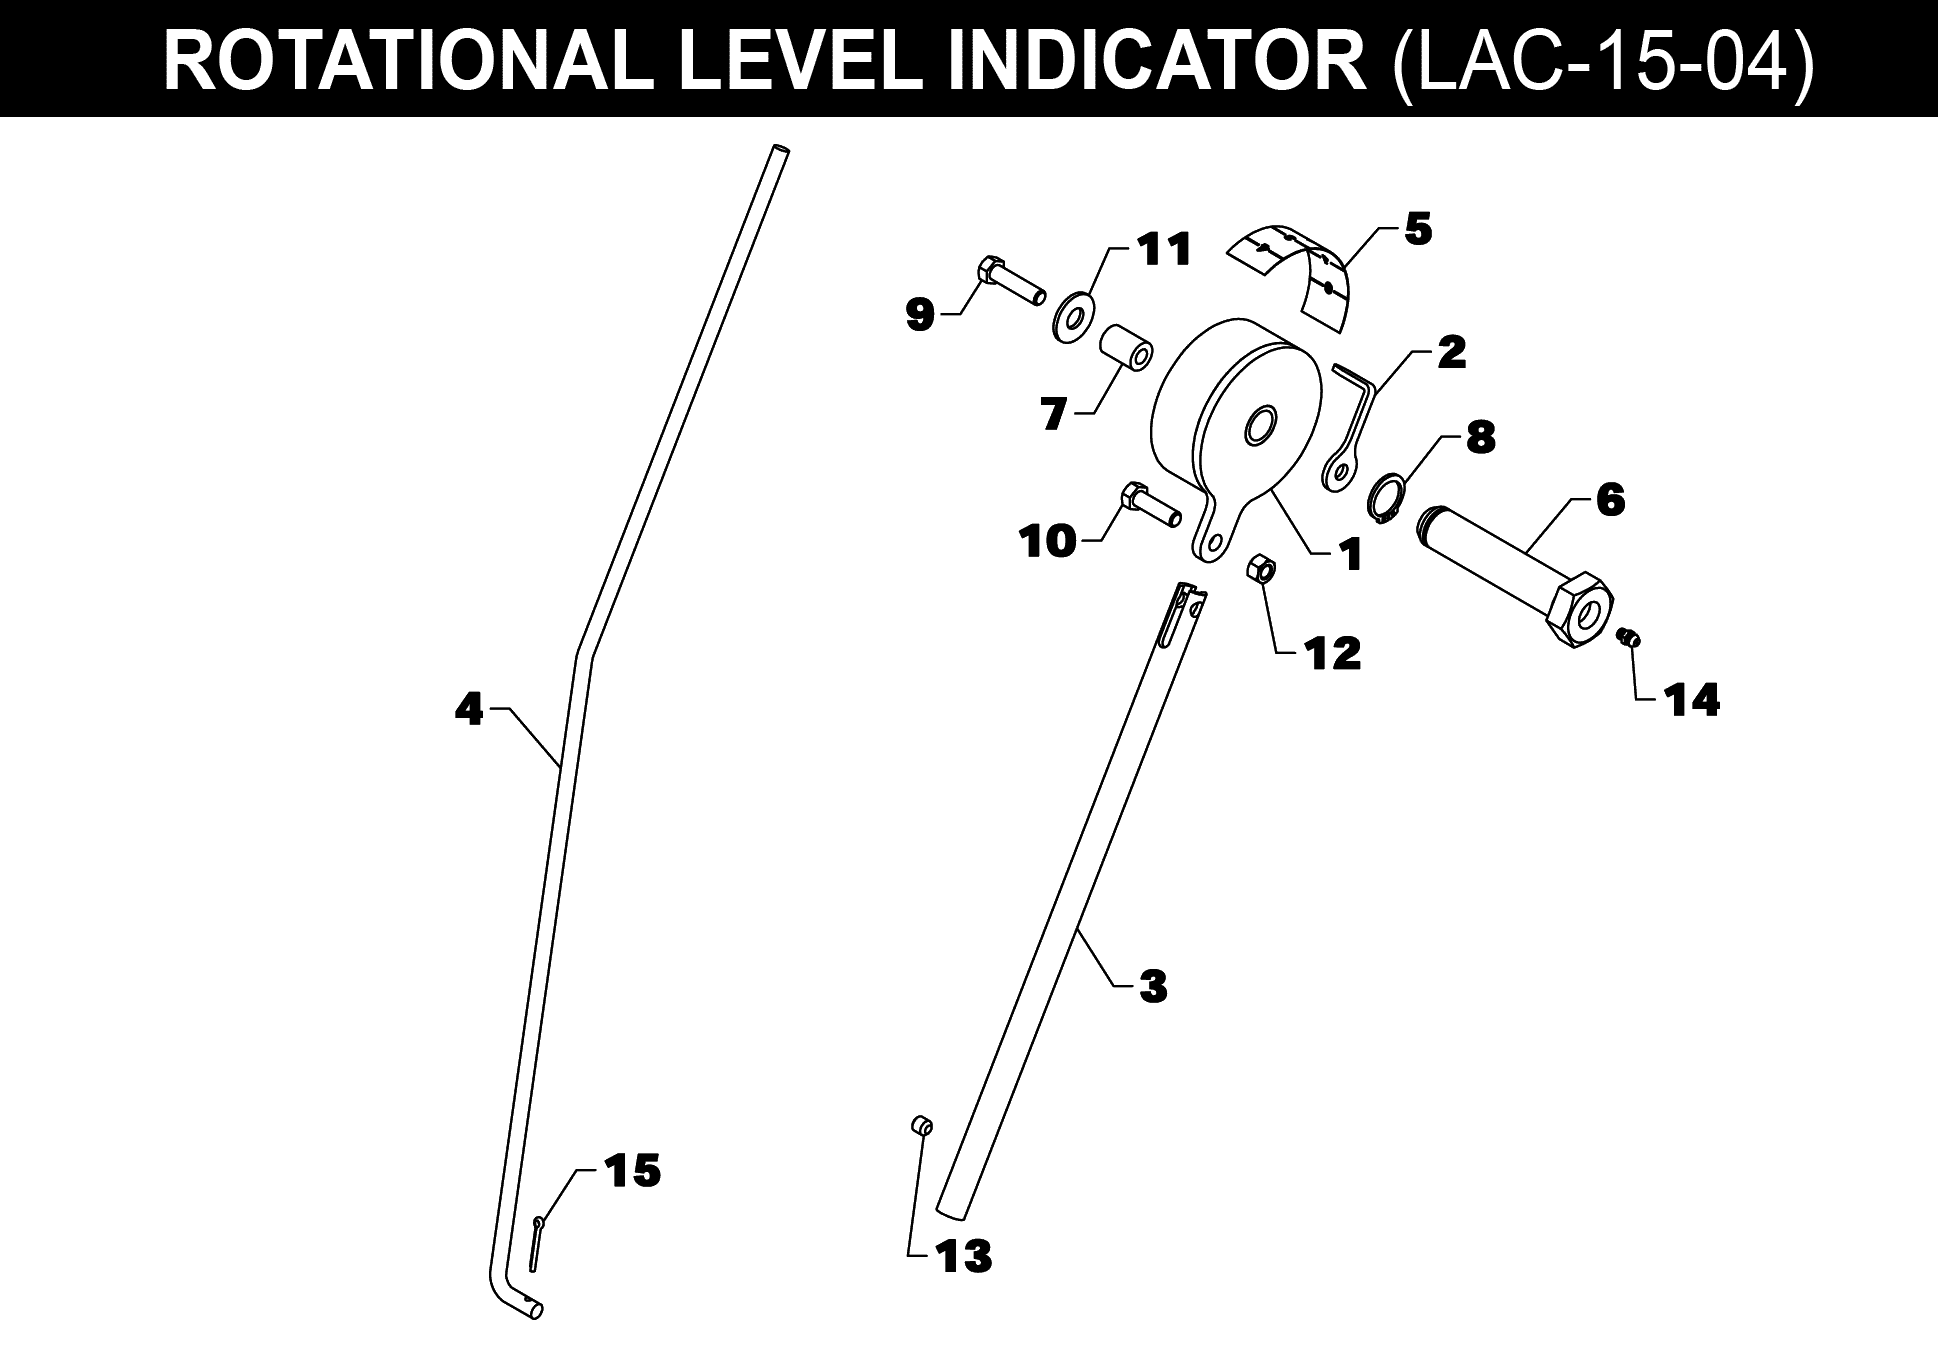 Bucket Indicator - LAC-15-04